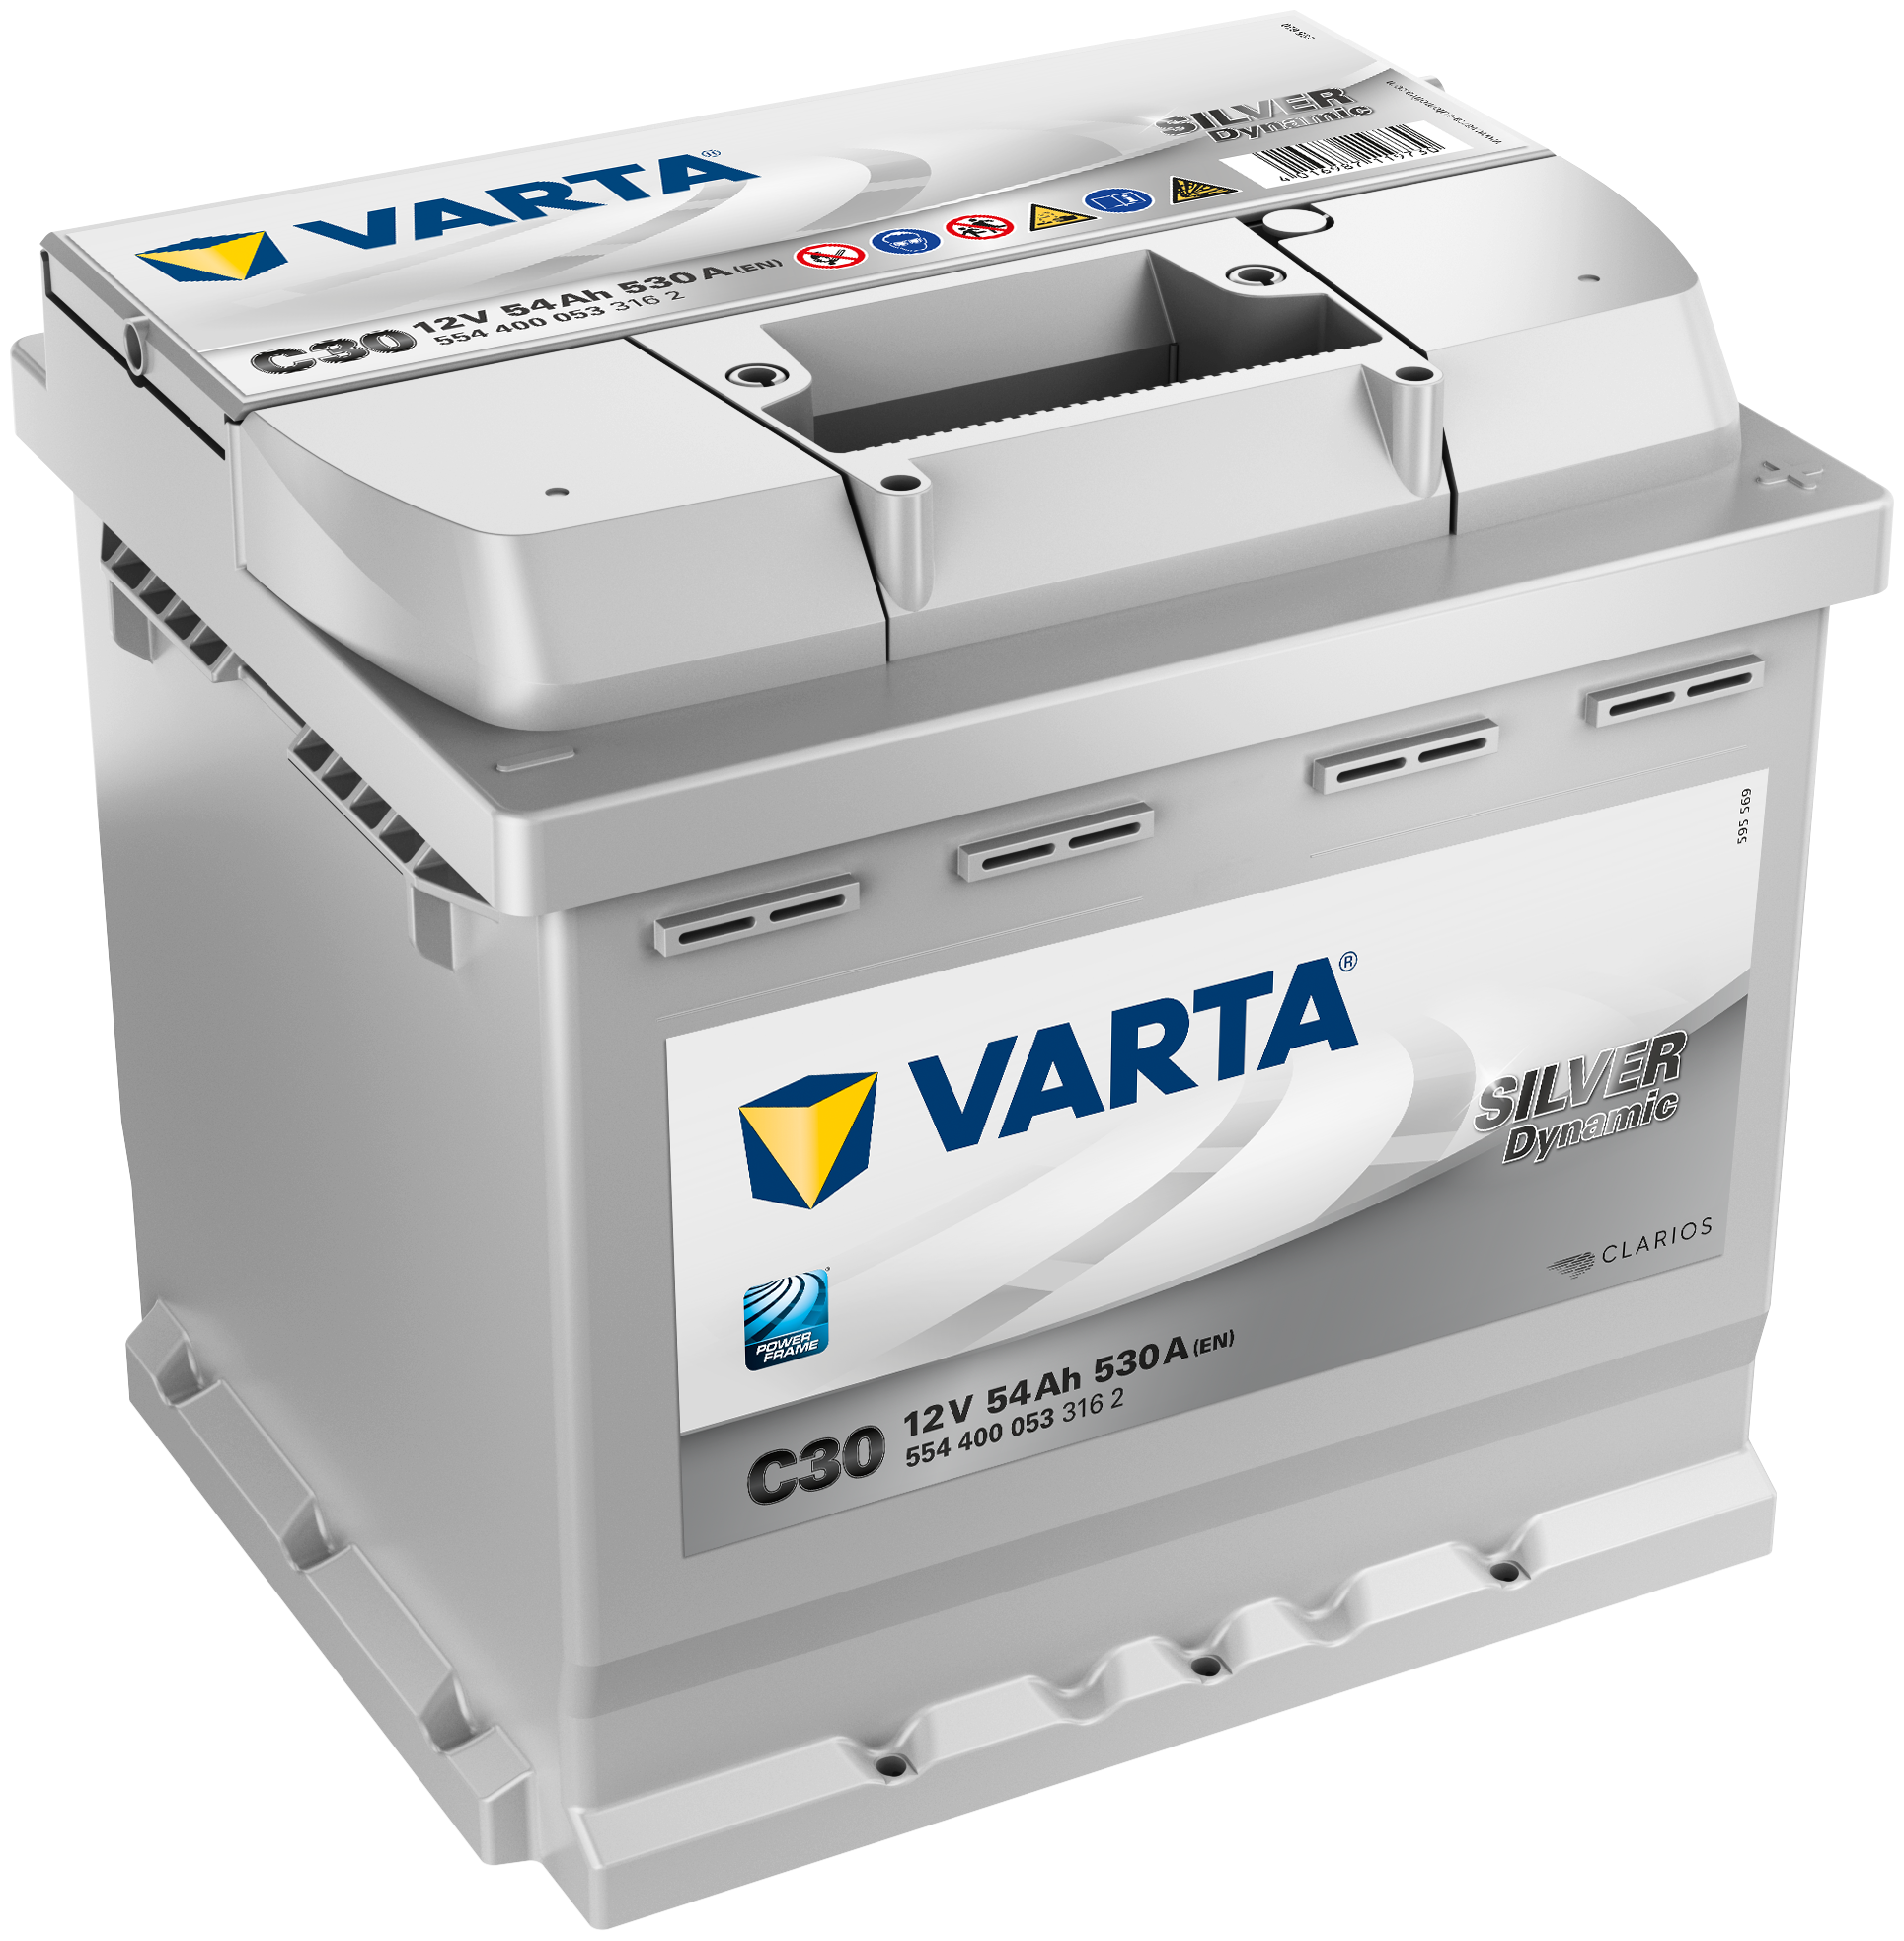 Автомобильный аккумулятор VARTA Silver Dynamic C30 554 400 053 207х175х190